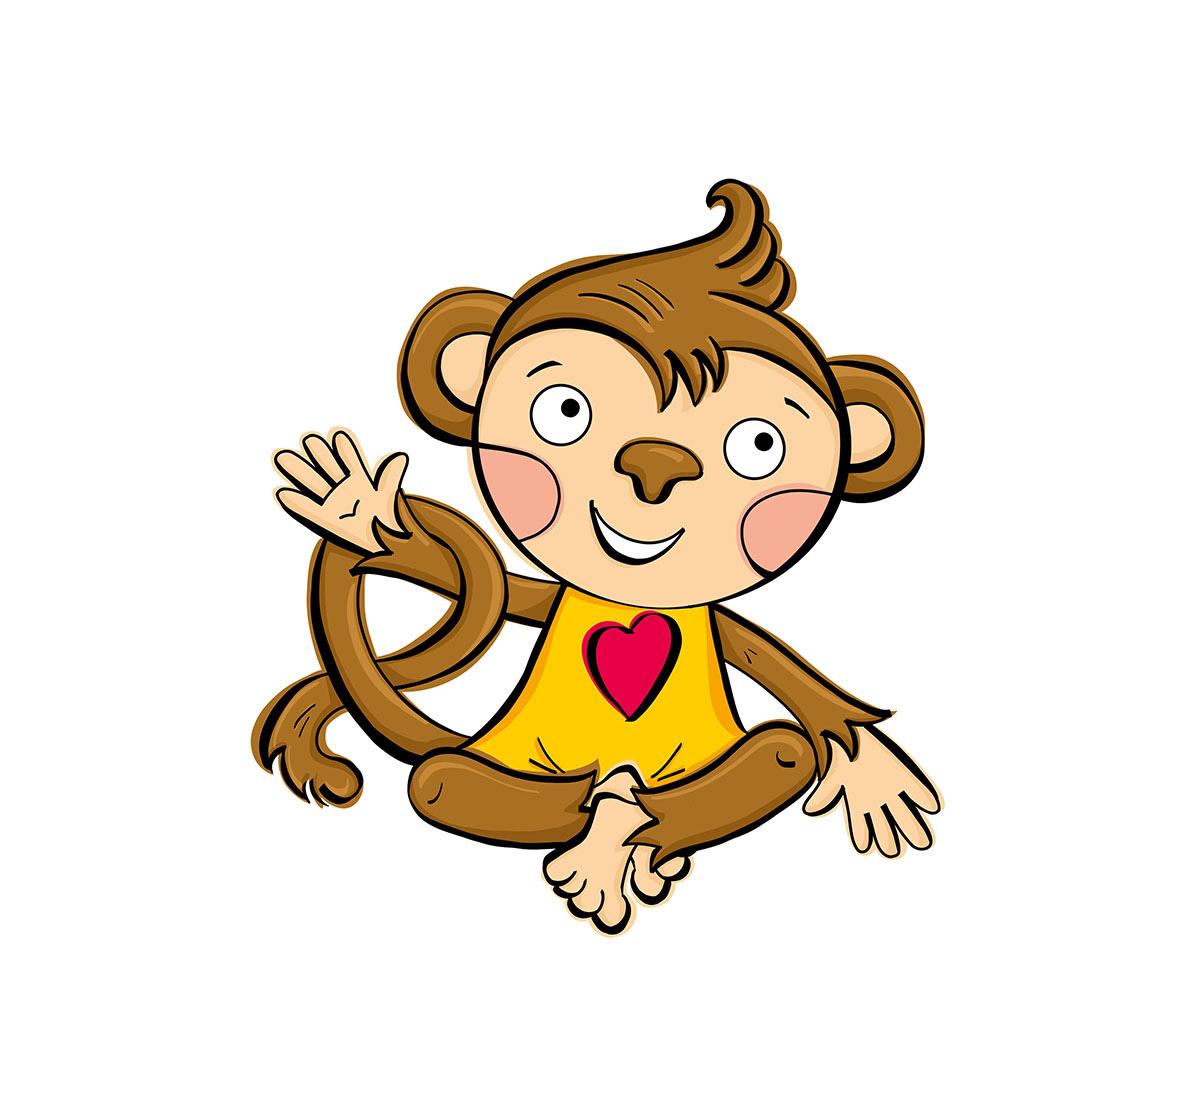 Monkey character design